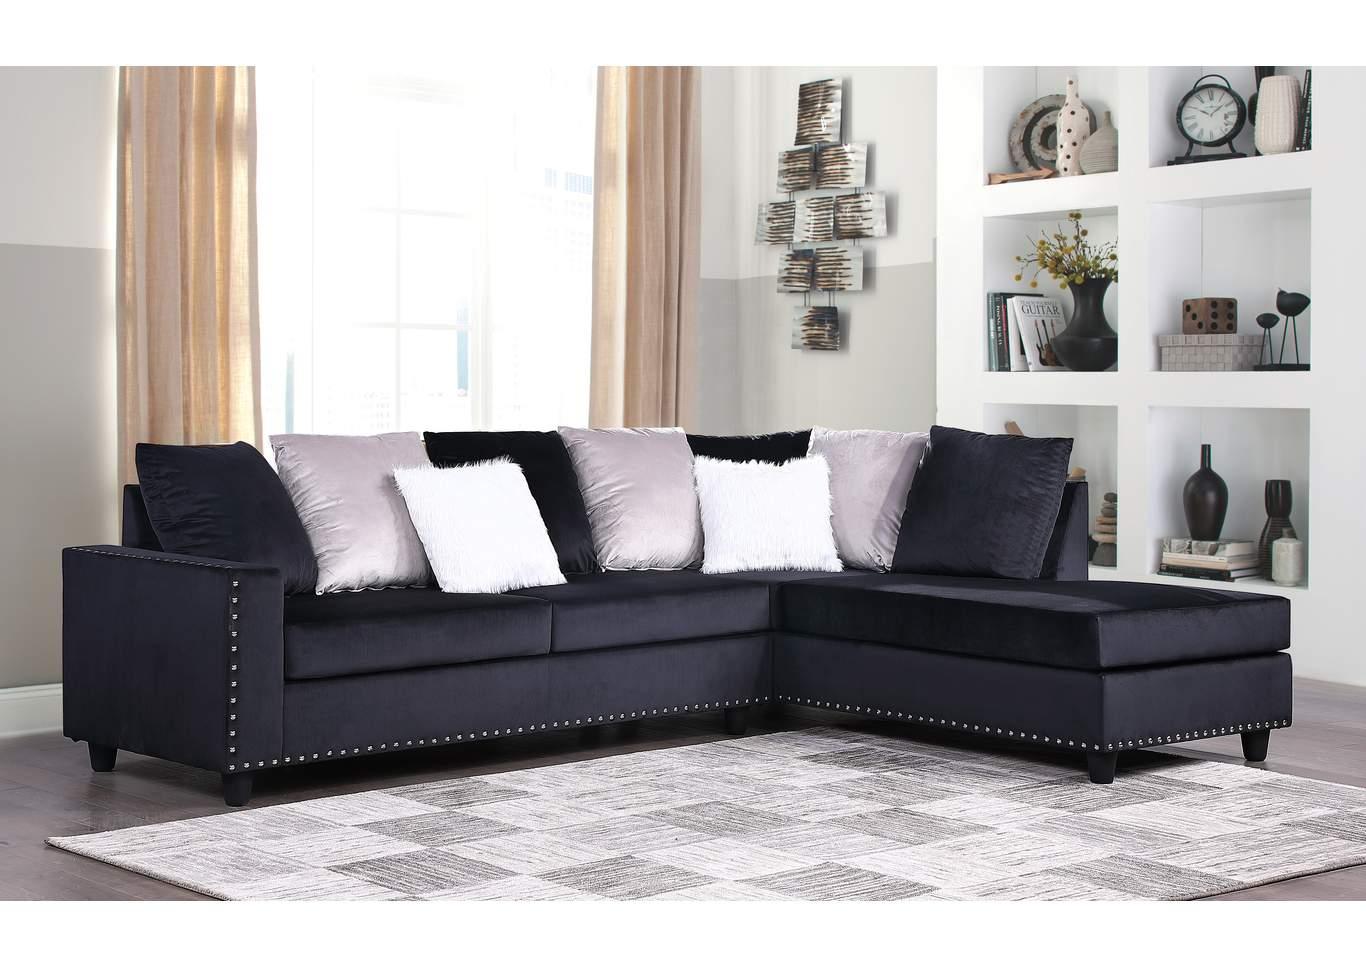 Galaxy Home Furniture MARTHA Sectional Sofa